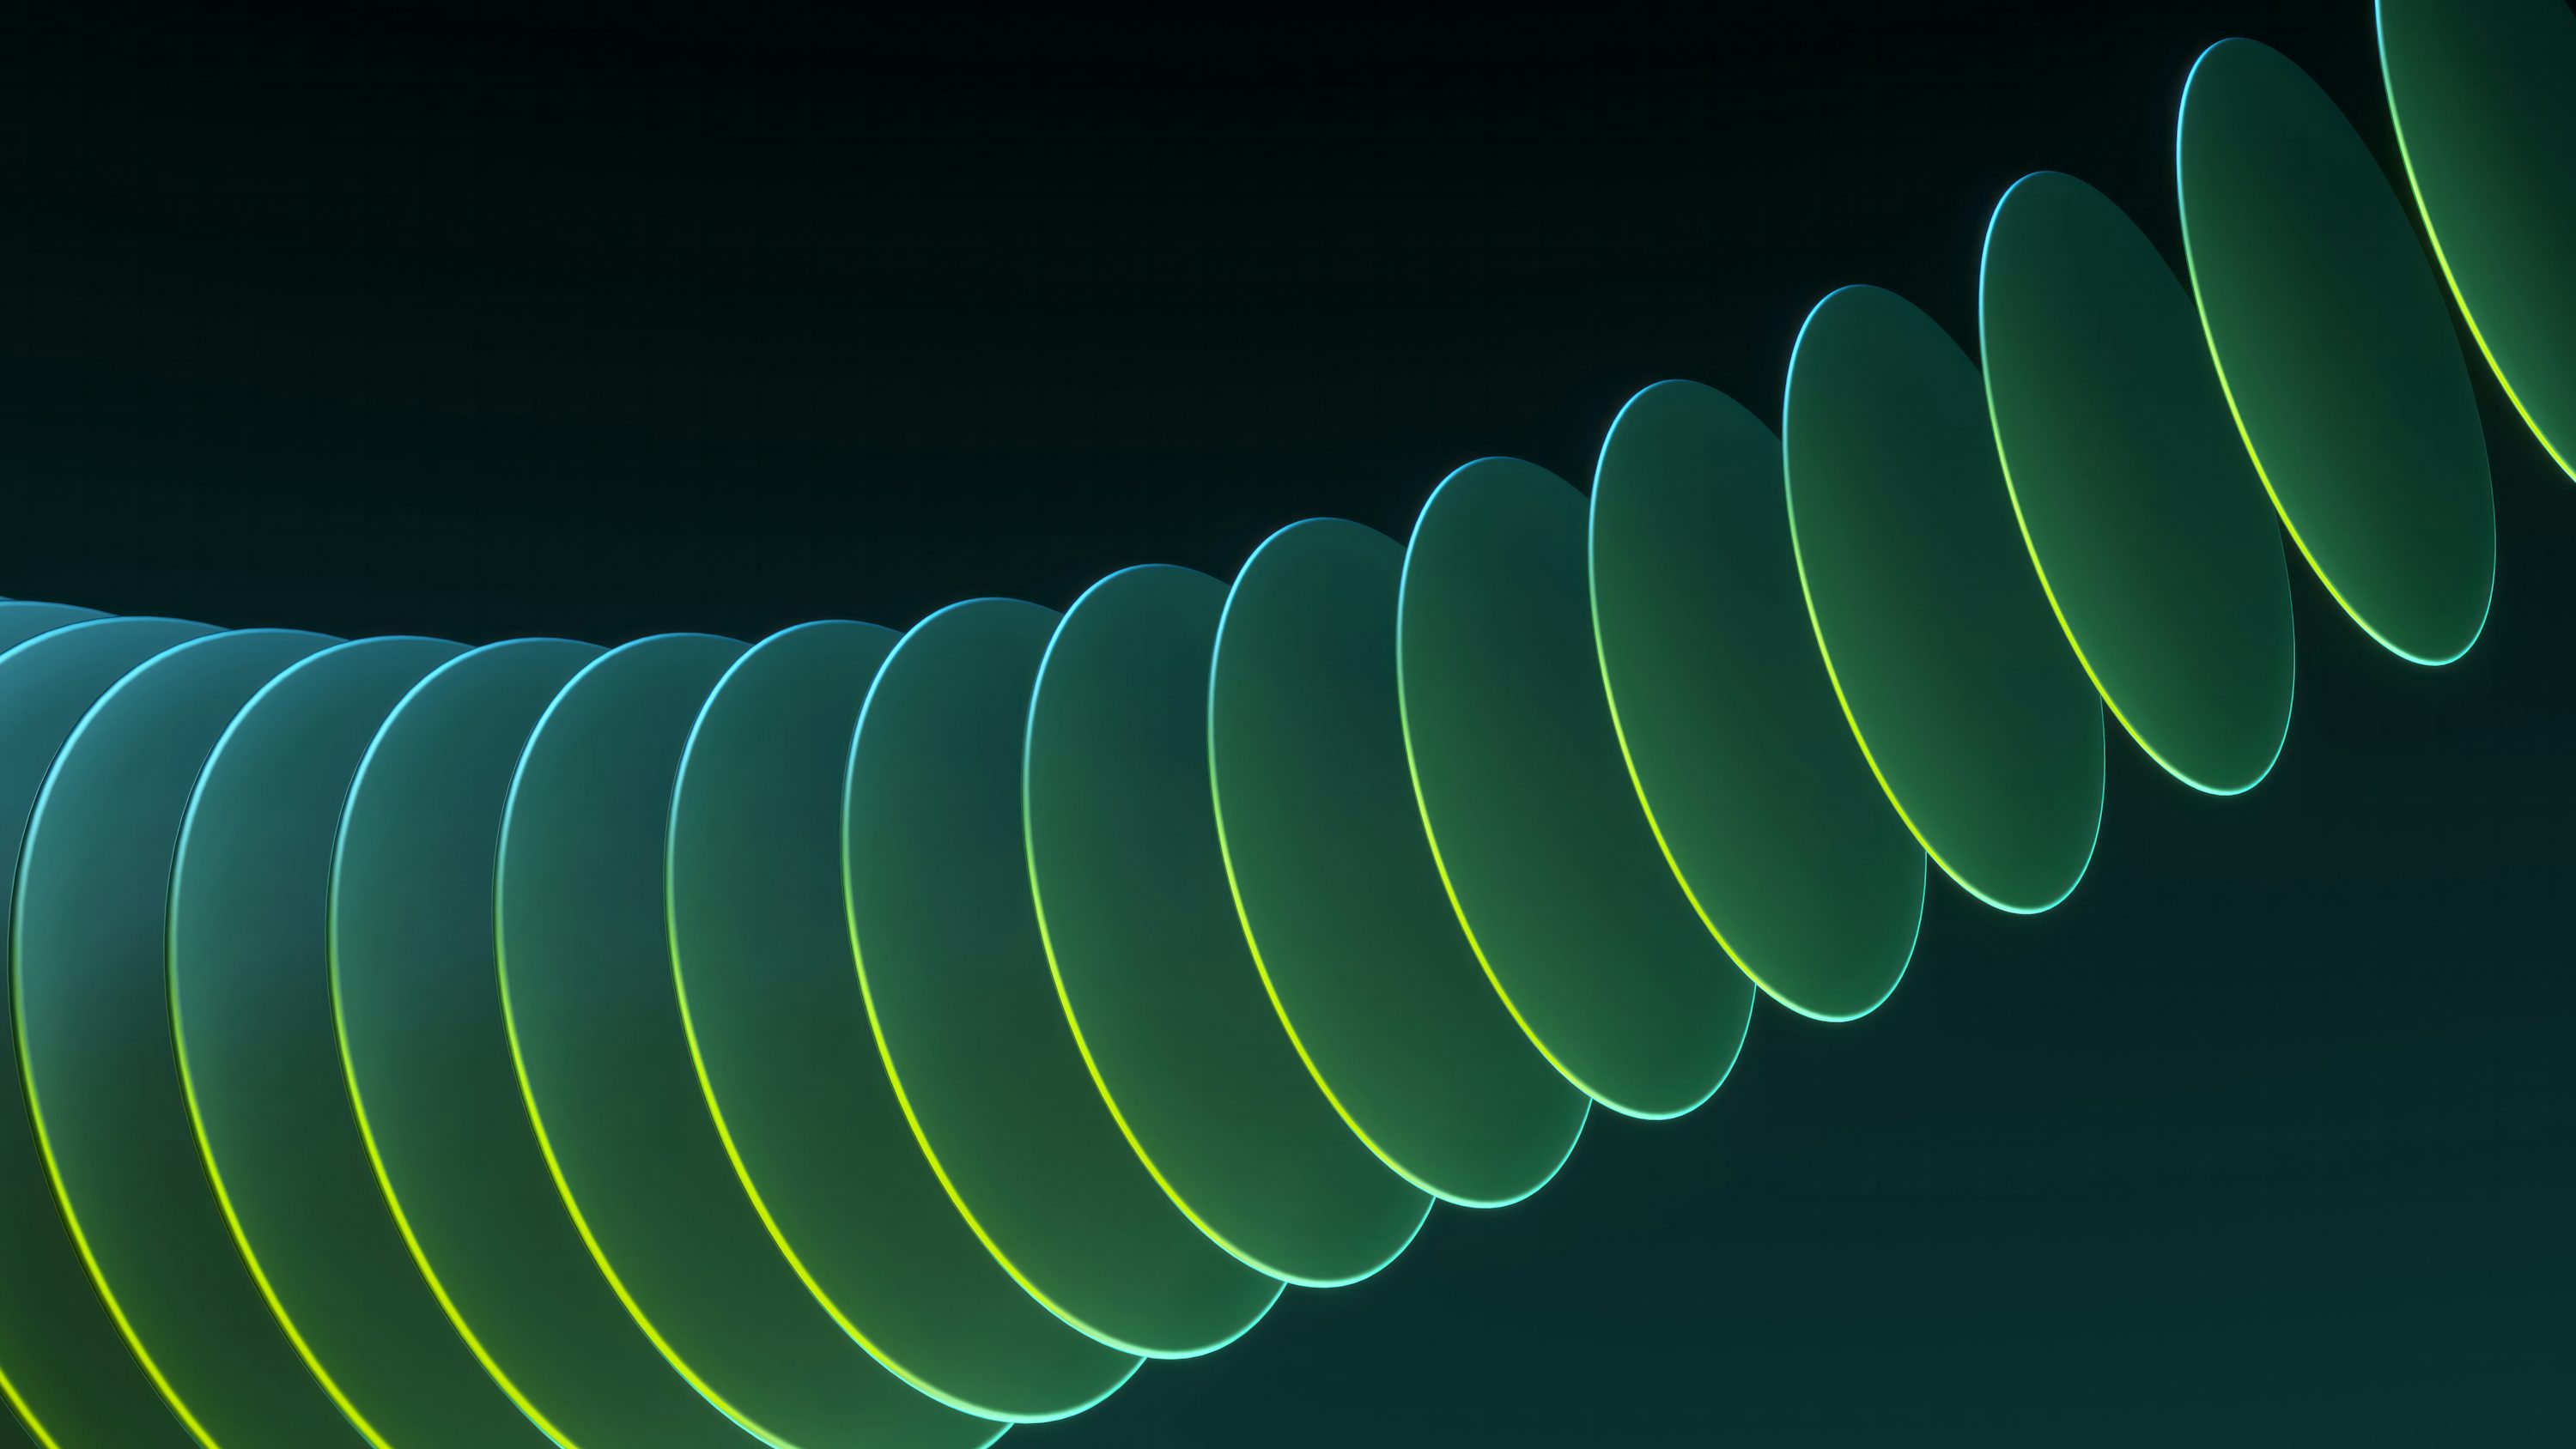 Una imagen abstracta de una línea verde curva